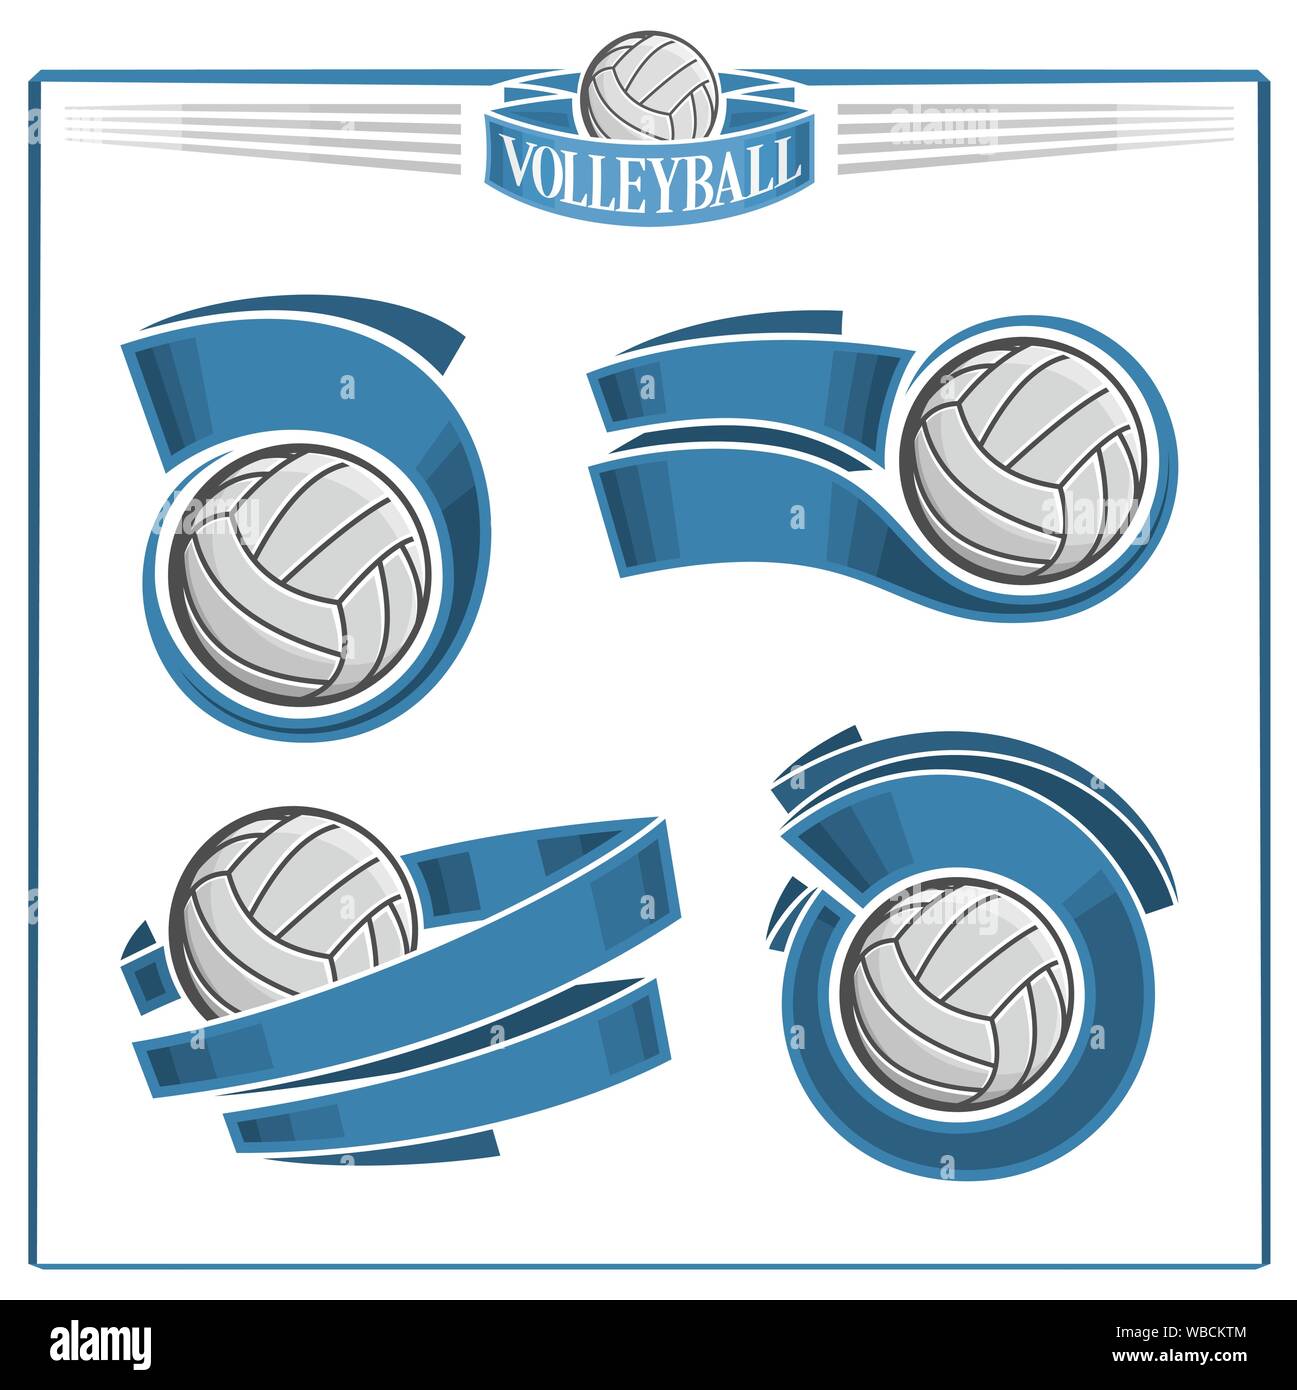 Volleyball ribbon Royalty Free Vector Image - VectorStock